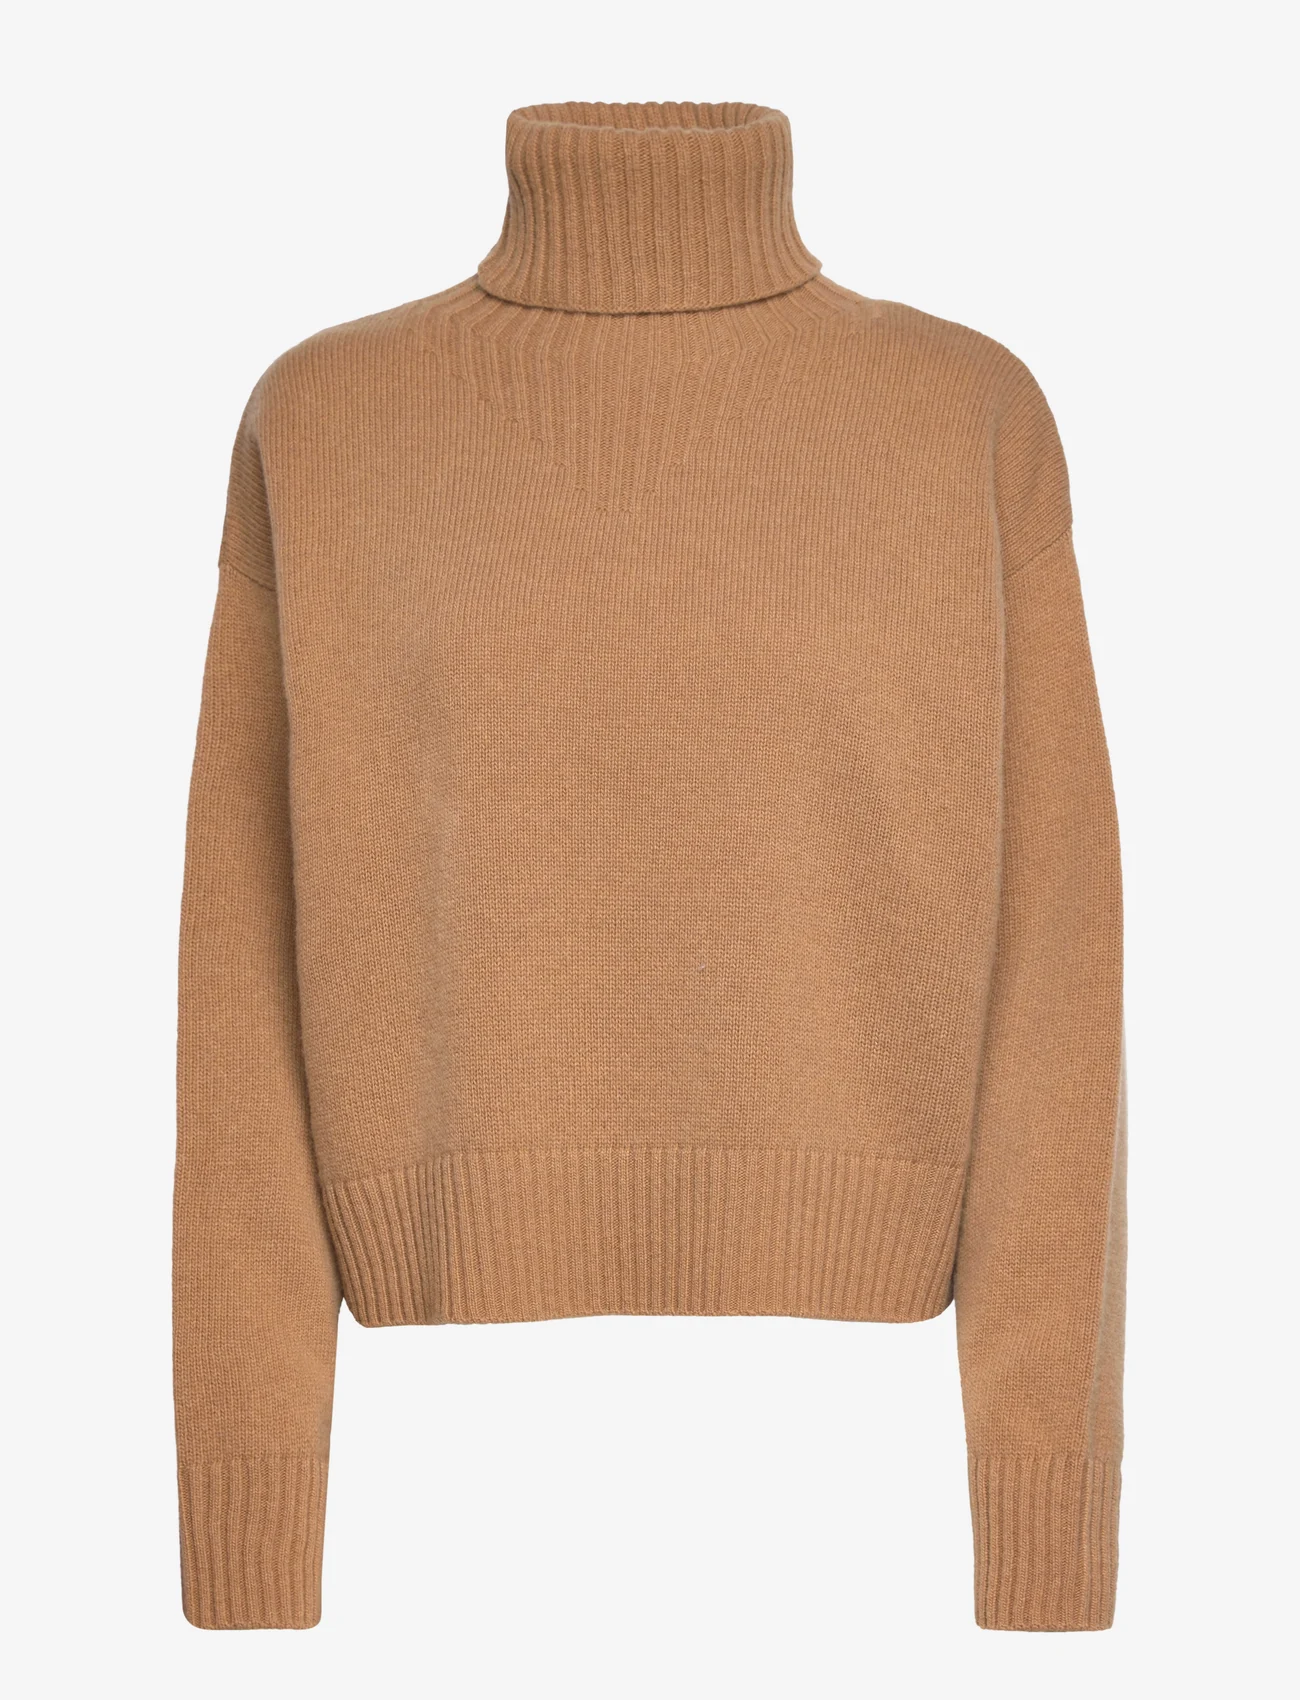 Filippa K - Wool Turtleneck Sweater - turtlenecks - camel - 0